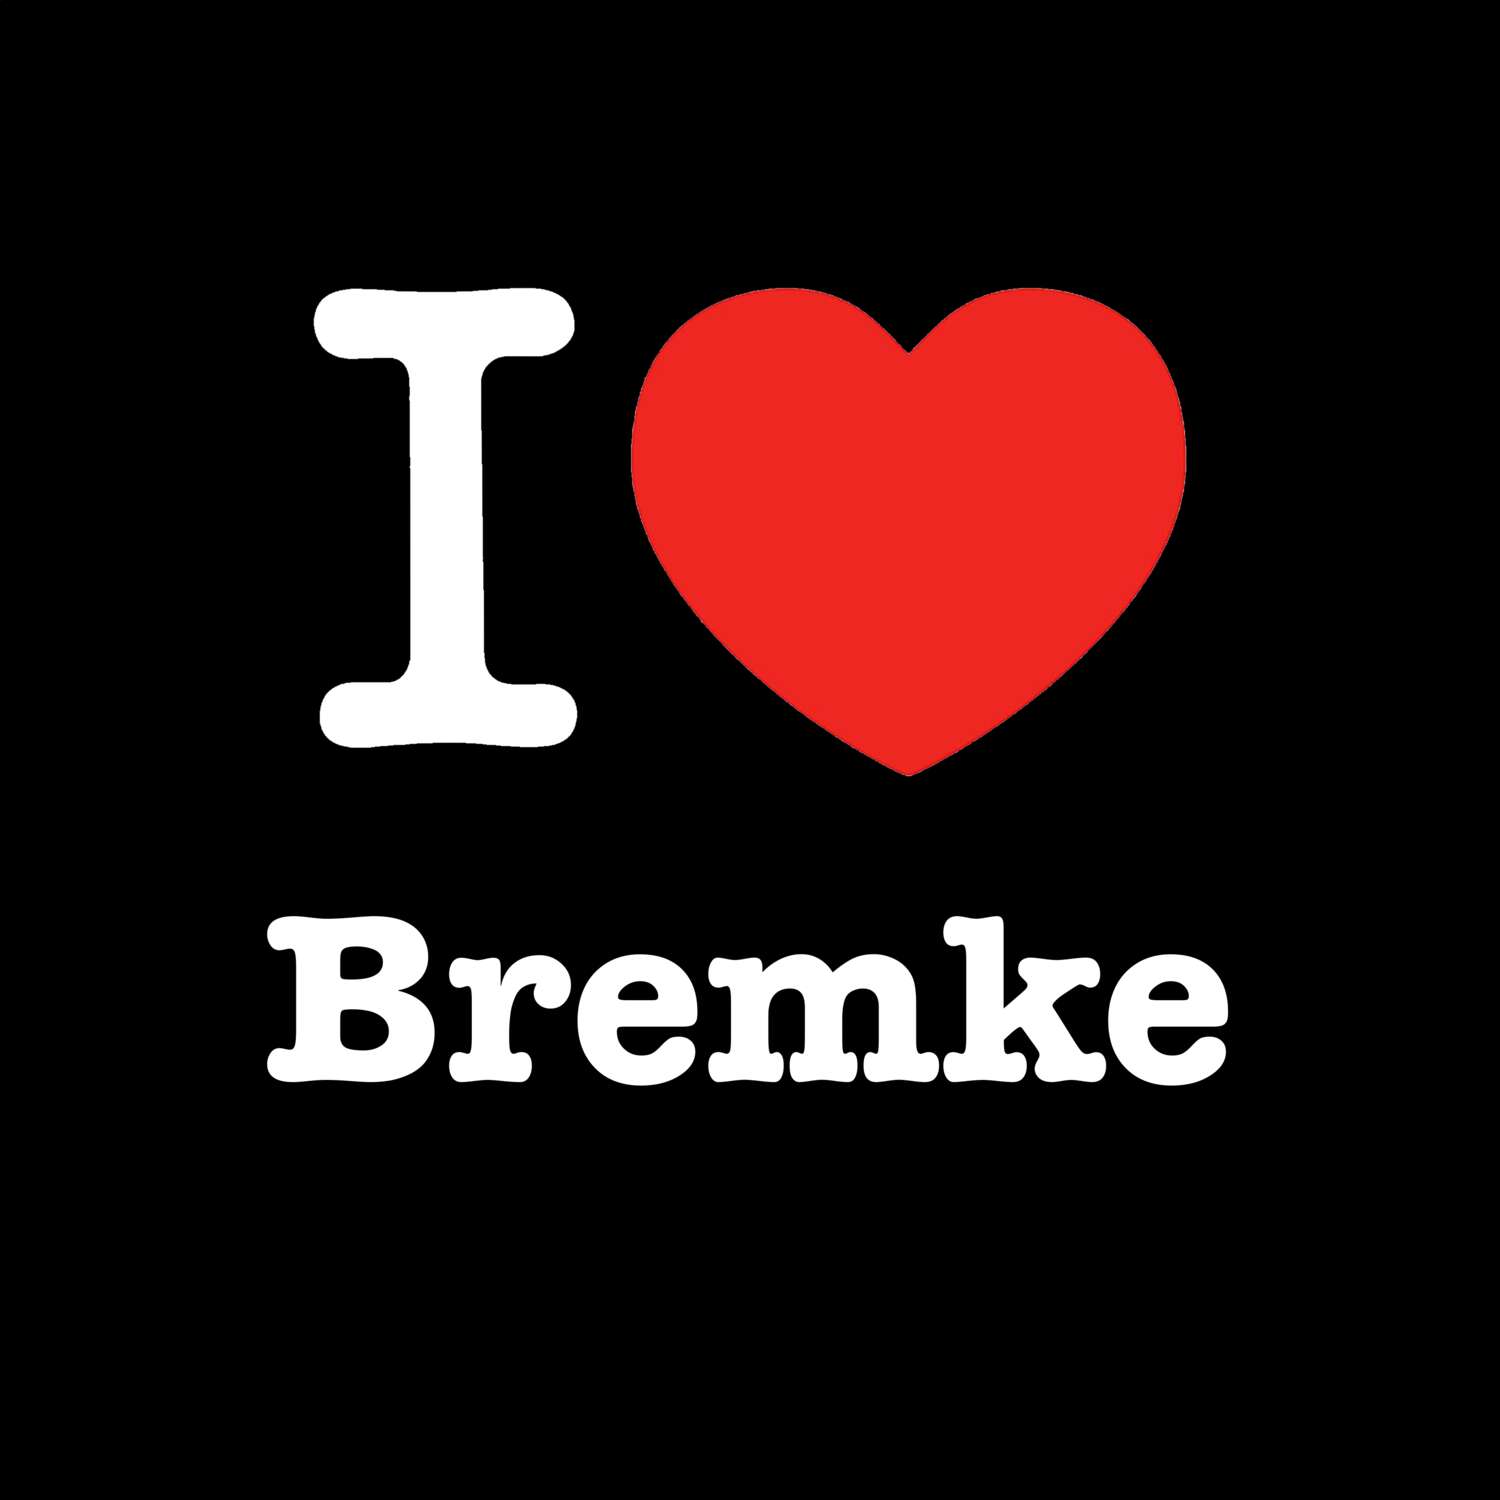 Bremke T-Shirt »I love«